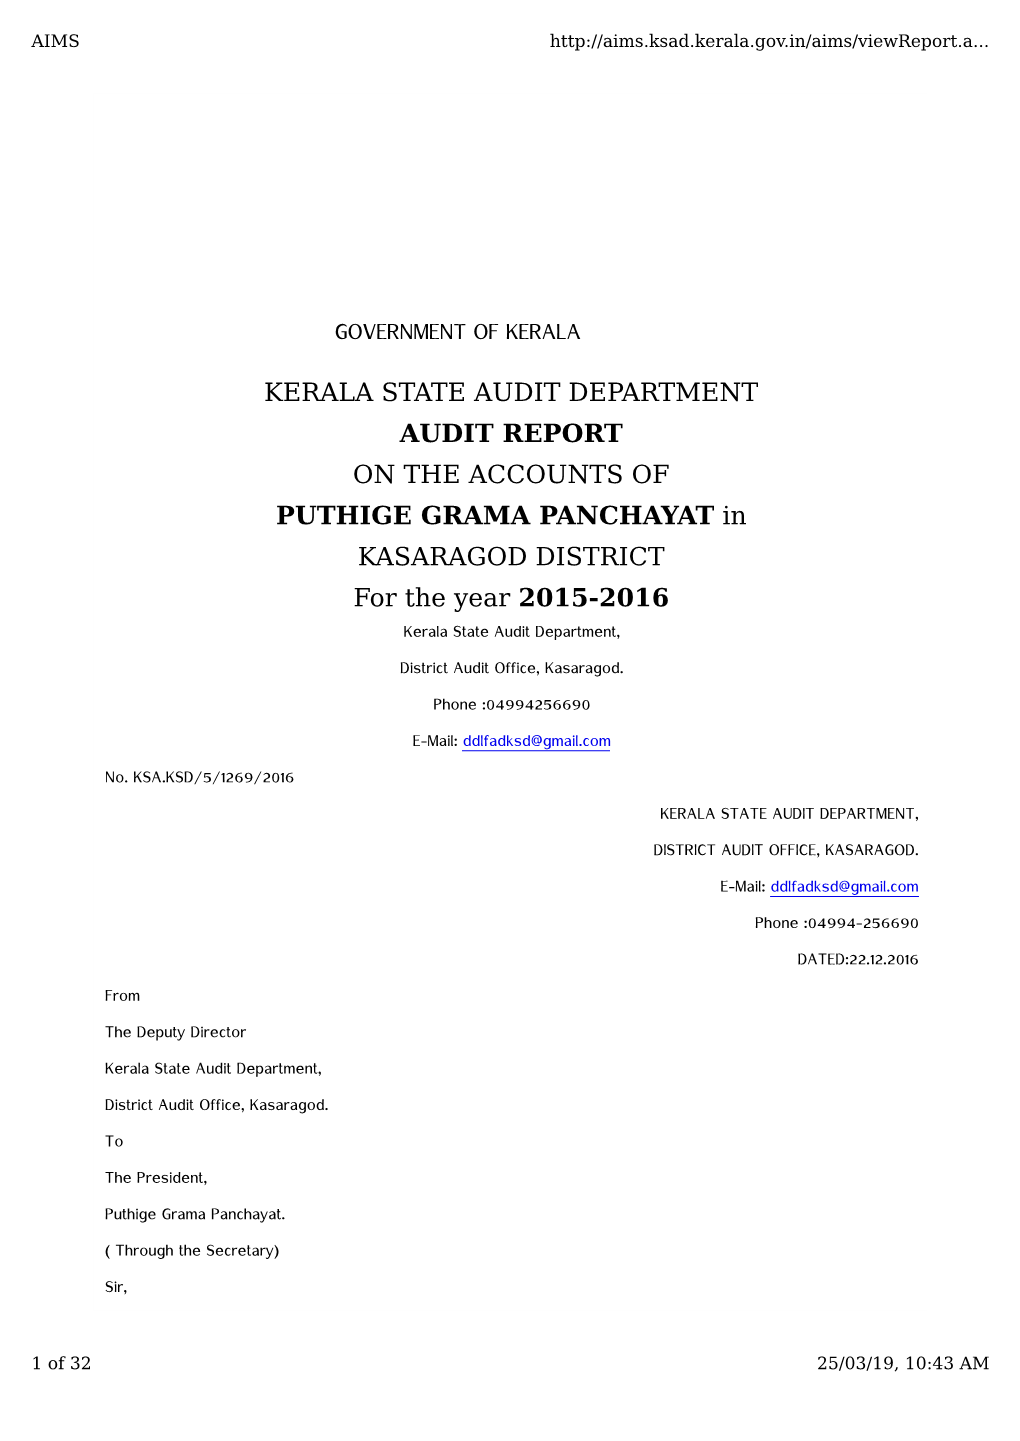 Government of Kerala Kerala State Audit Department